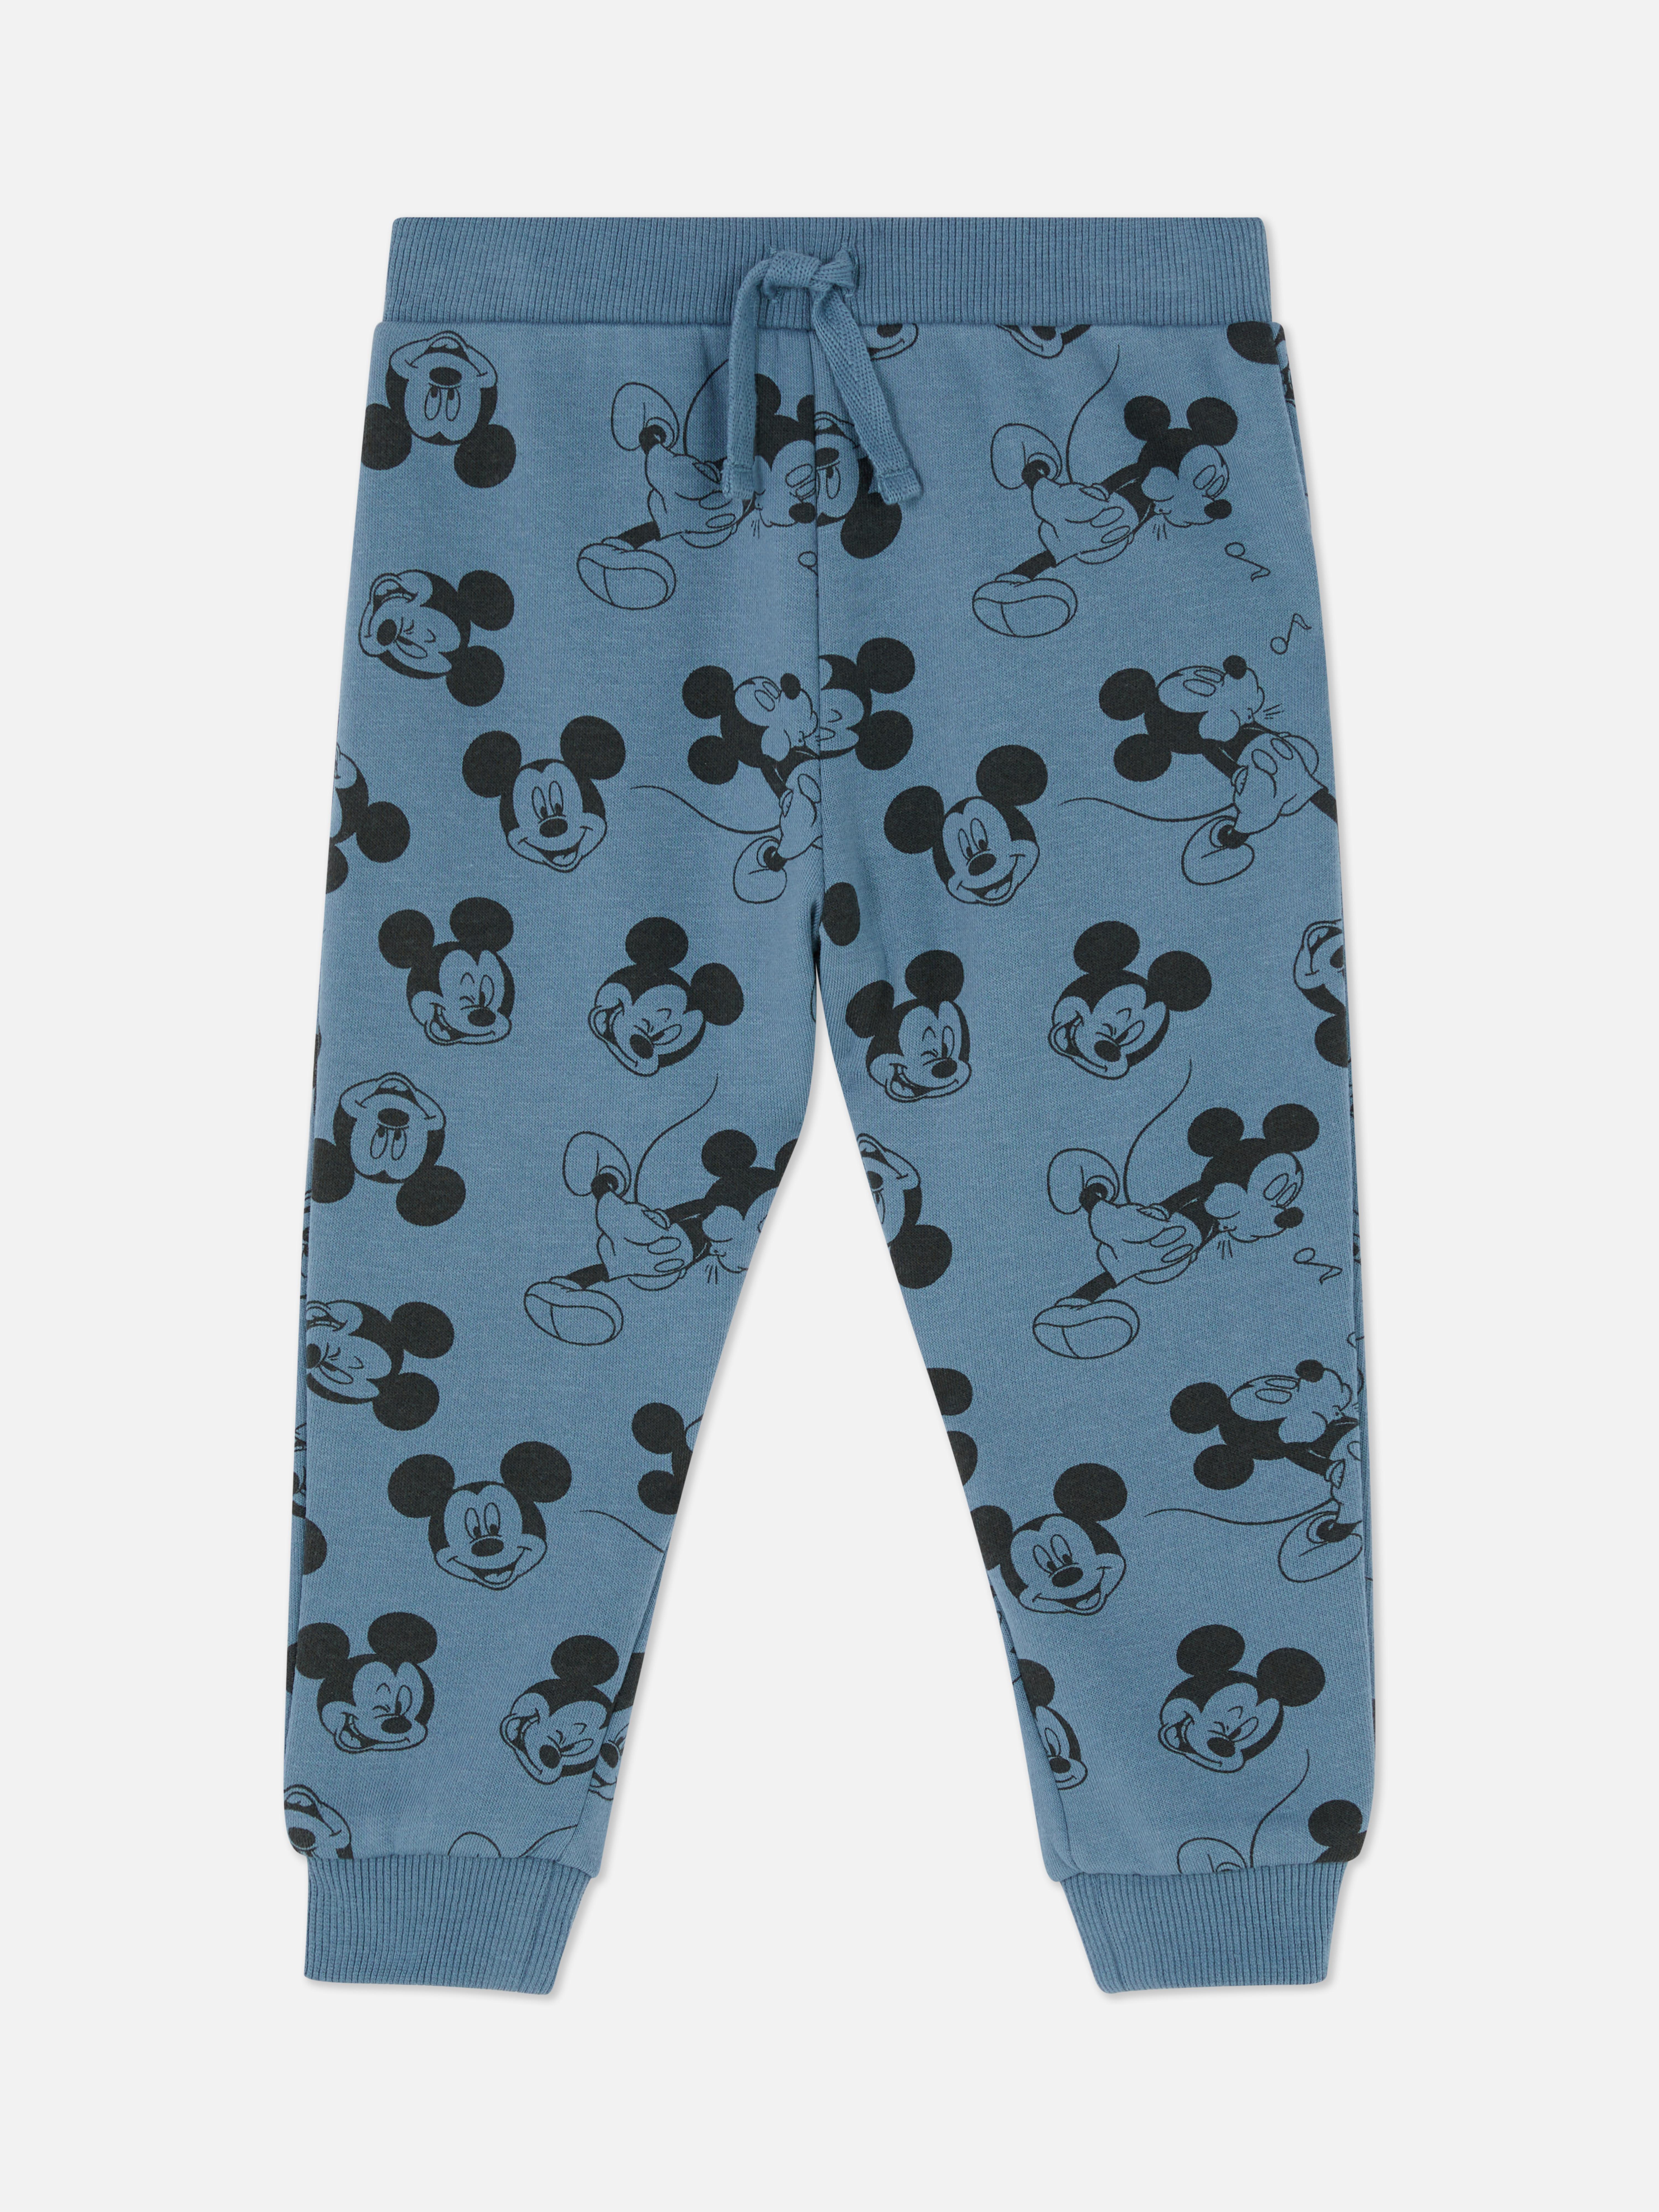 Disney’s Mickey Mouse Joggers